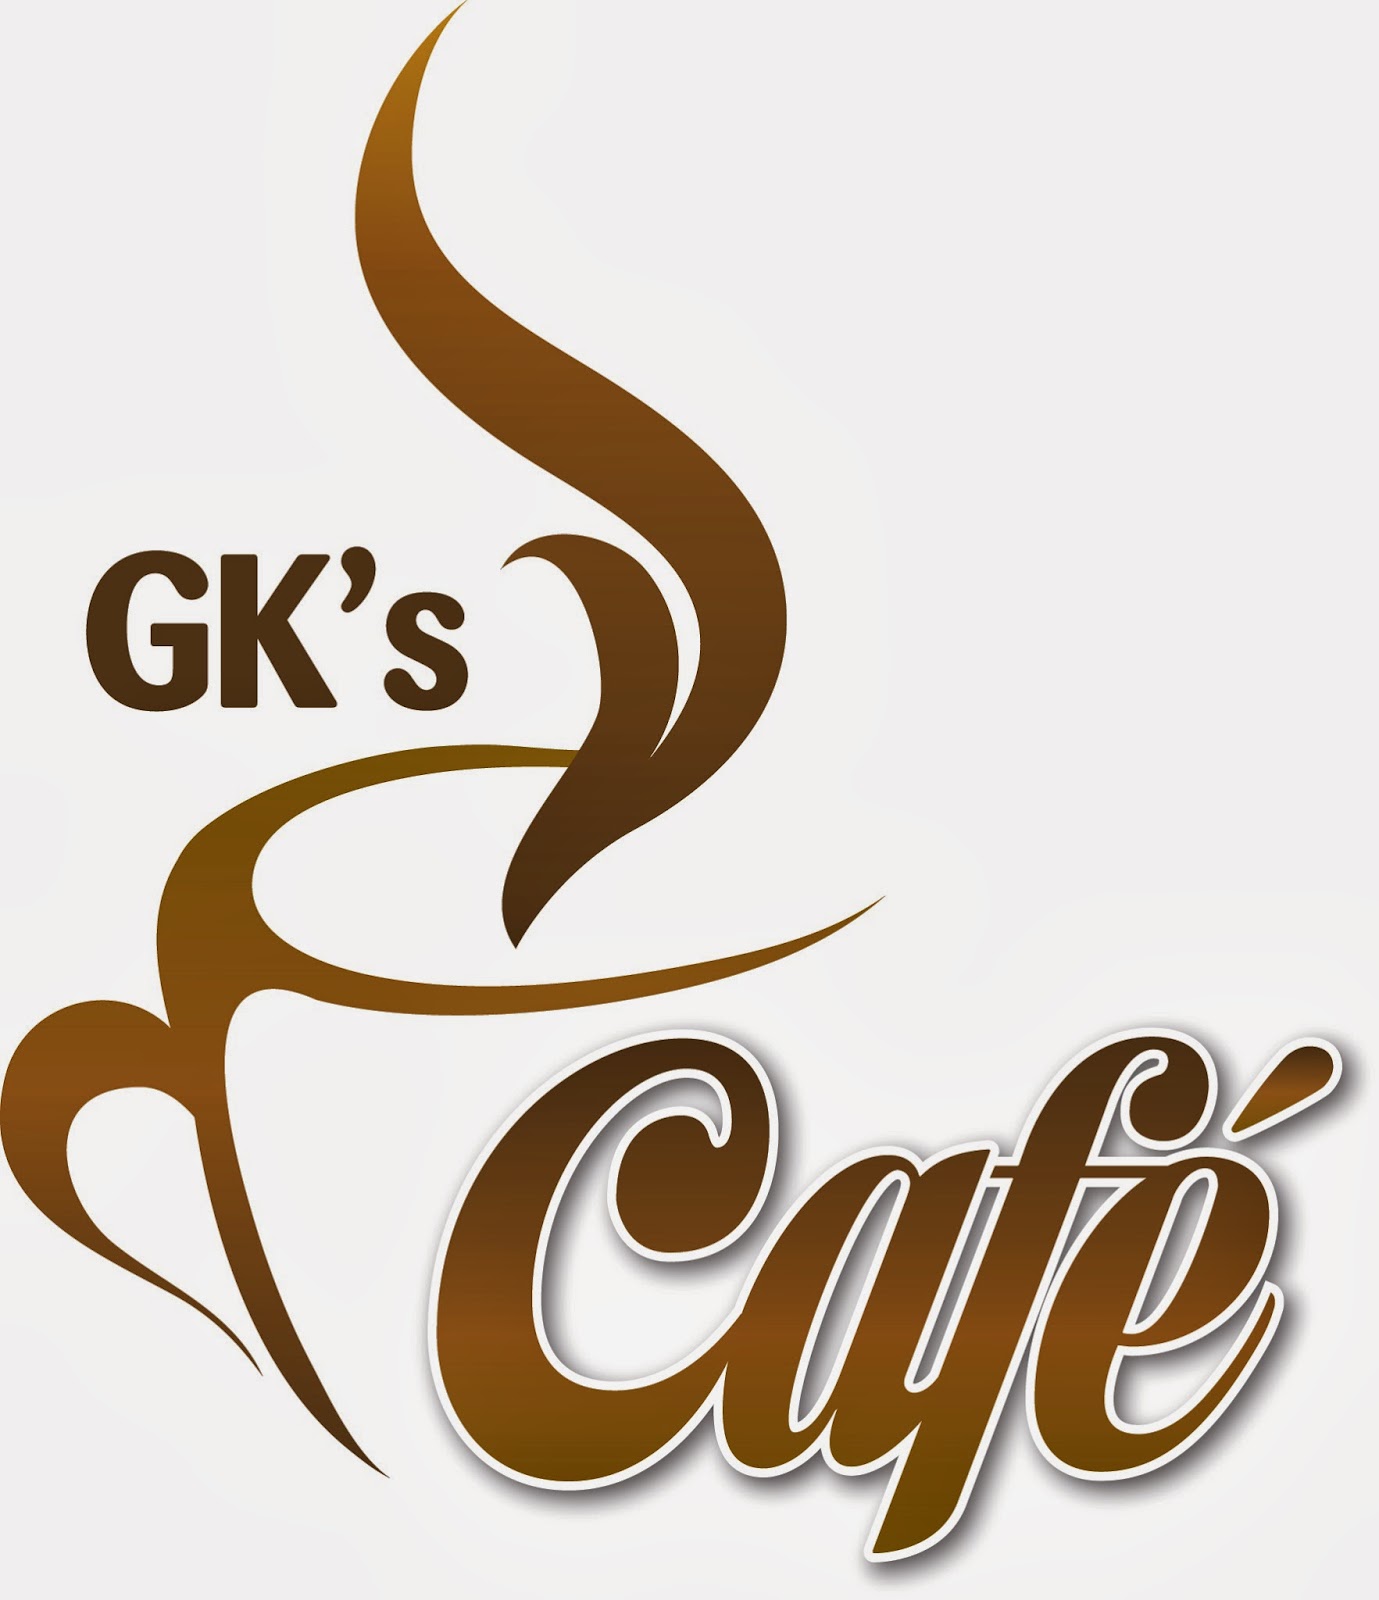  Cafe  Logos  Cafe  Story